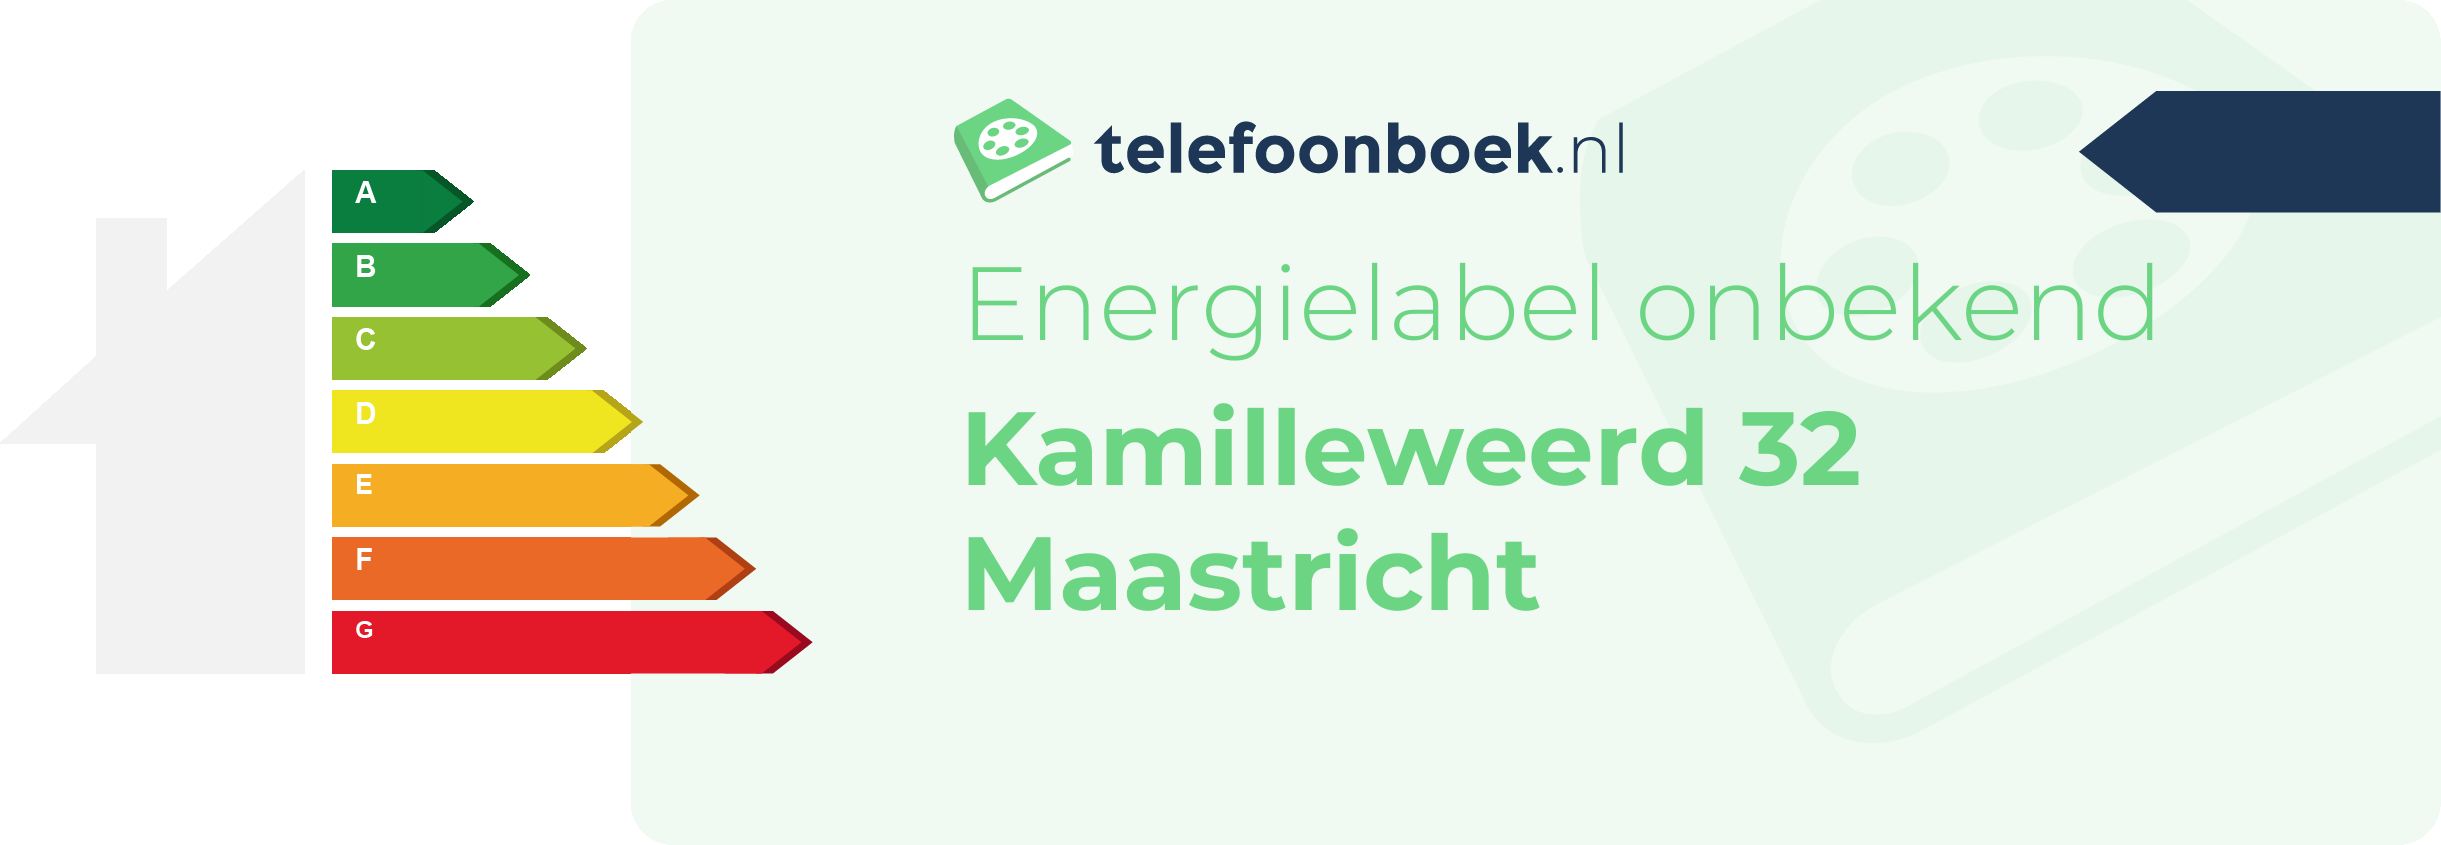 Energielabel Kamilleweerd 32 Maastricht